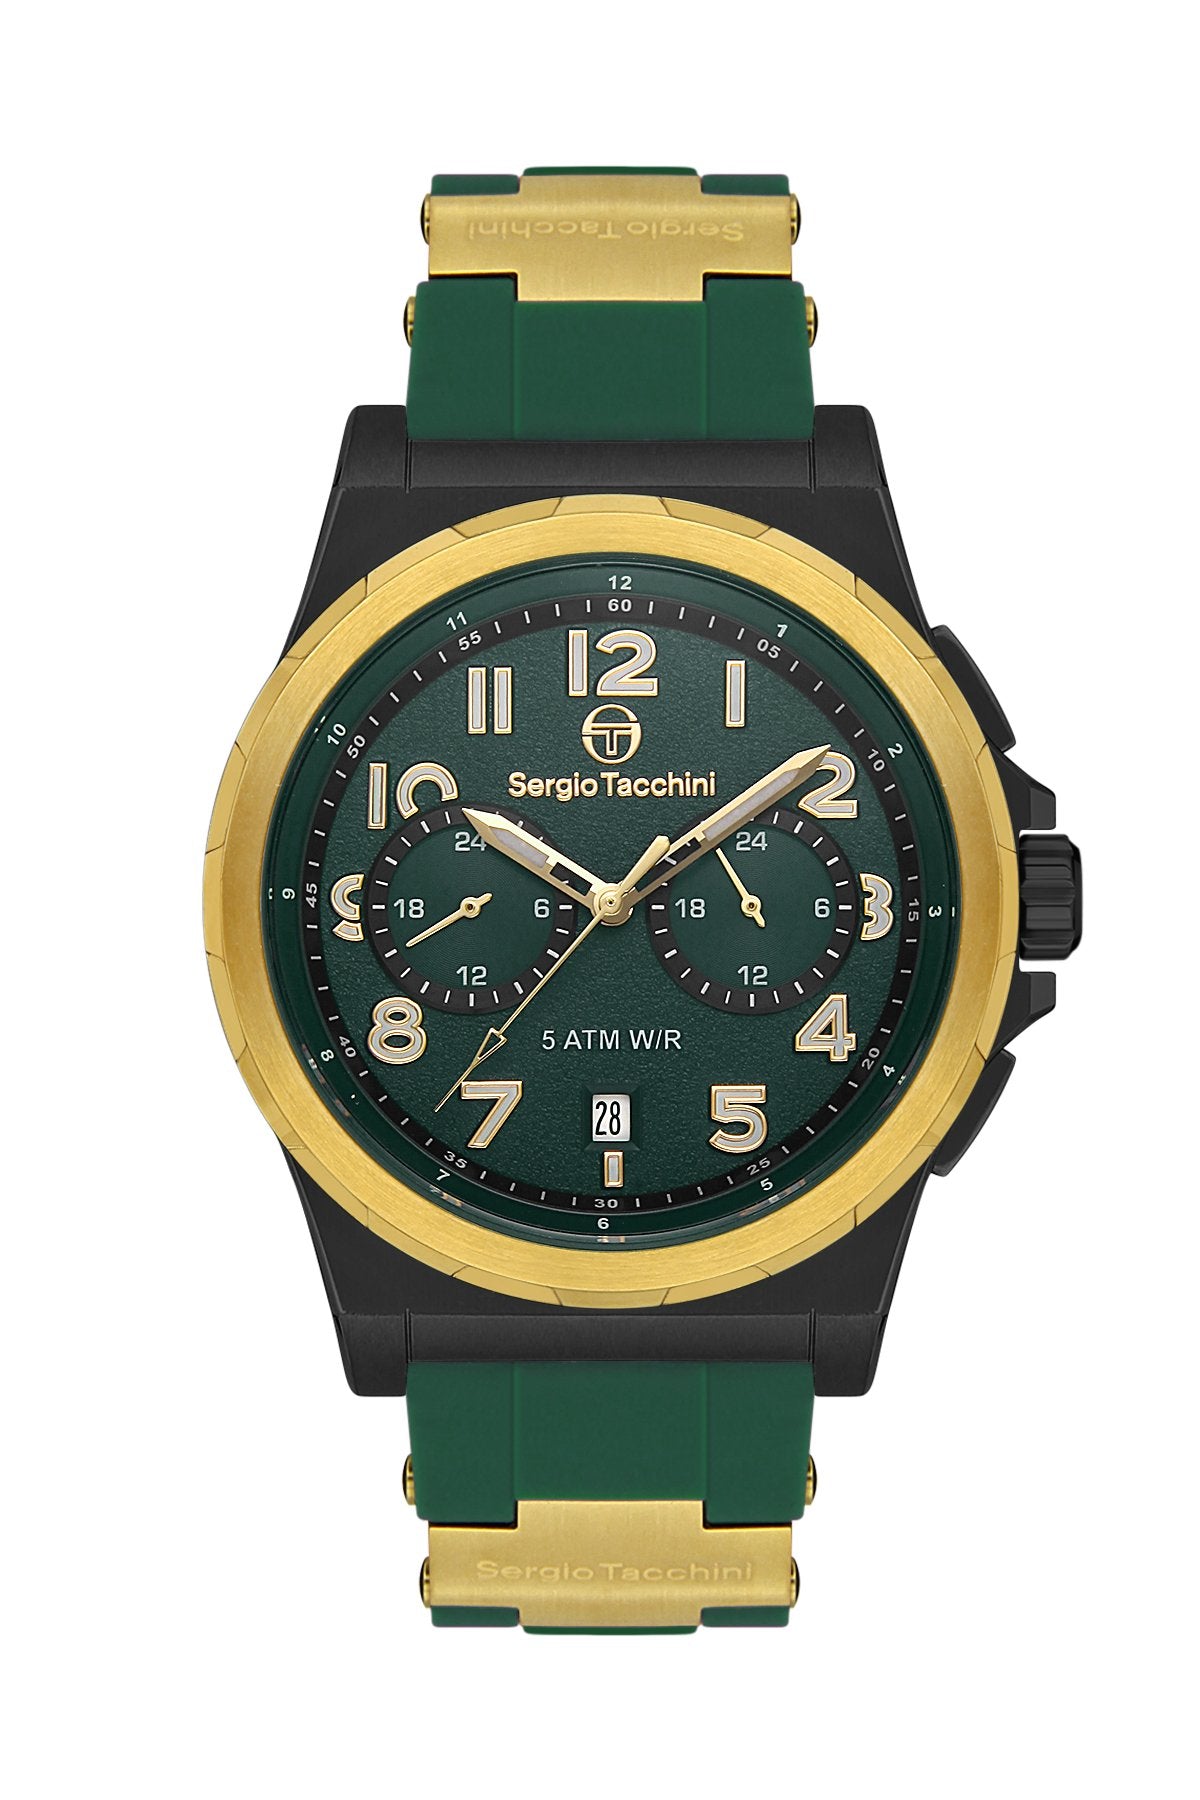 | Sergio Tacchini Men's Watch ST.1.10407-5 - Takreem Fusion | - #sho| Sergio Tacchini Men's Watch ST.1.10407-5 - Takreem Fusion |p_name#| Sergio Tacchini Men's Watch ST.1.10407-5 - Takreem Fusion |WatchSergio TacchiniTakreem.joST.1.10407-58682308153057GreenRubberMen| Sergio Tacchini Men's Watch ST.1.10407-5 - Takreem Fusion |